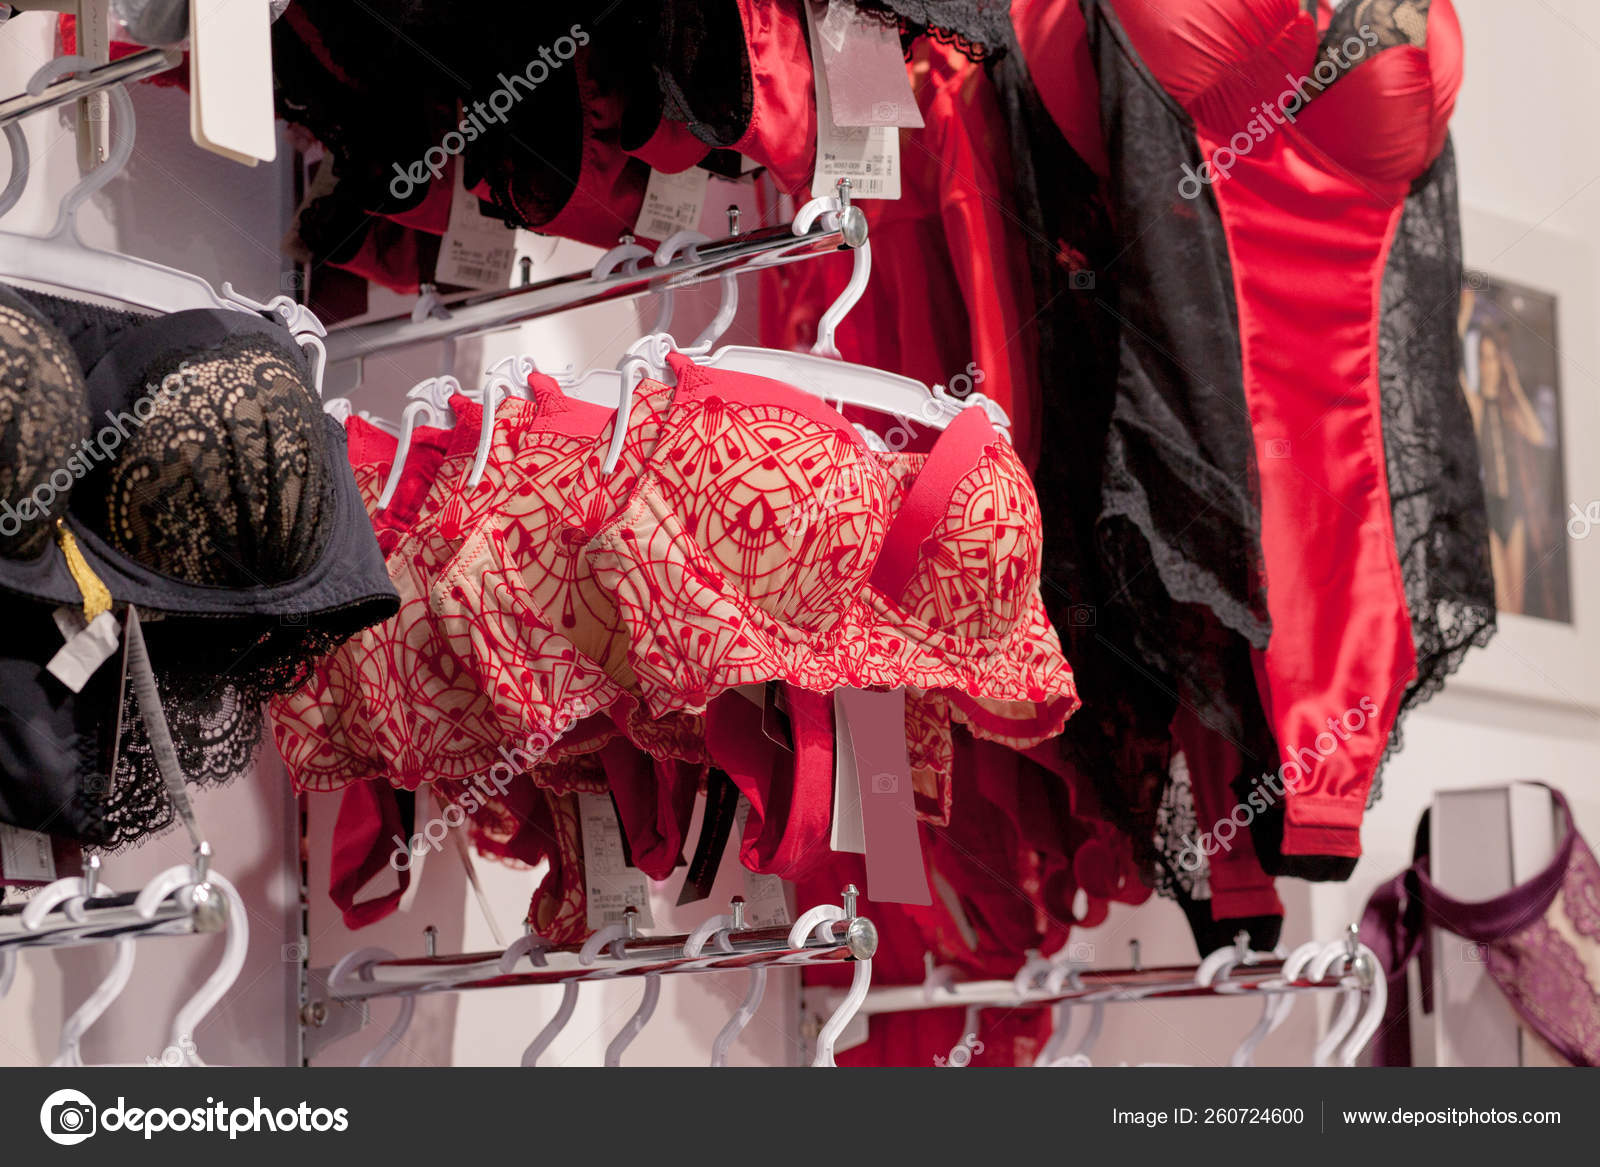 Vareity of bra hanging in lingerie underwear store. Advertise, S